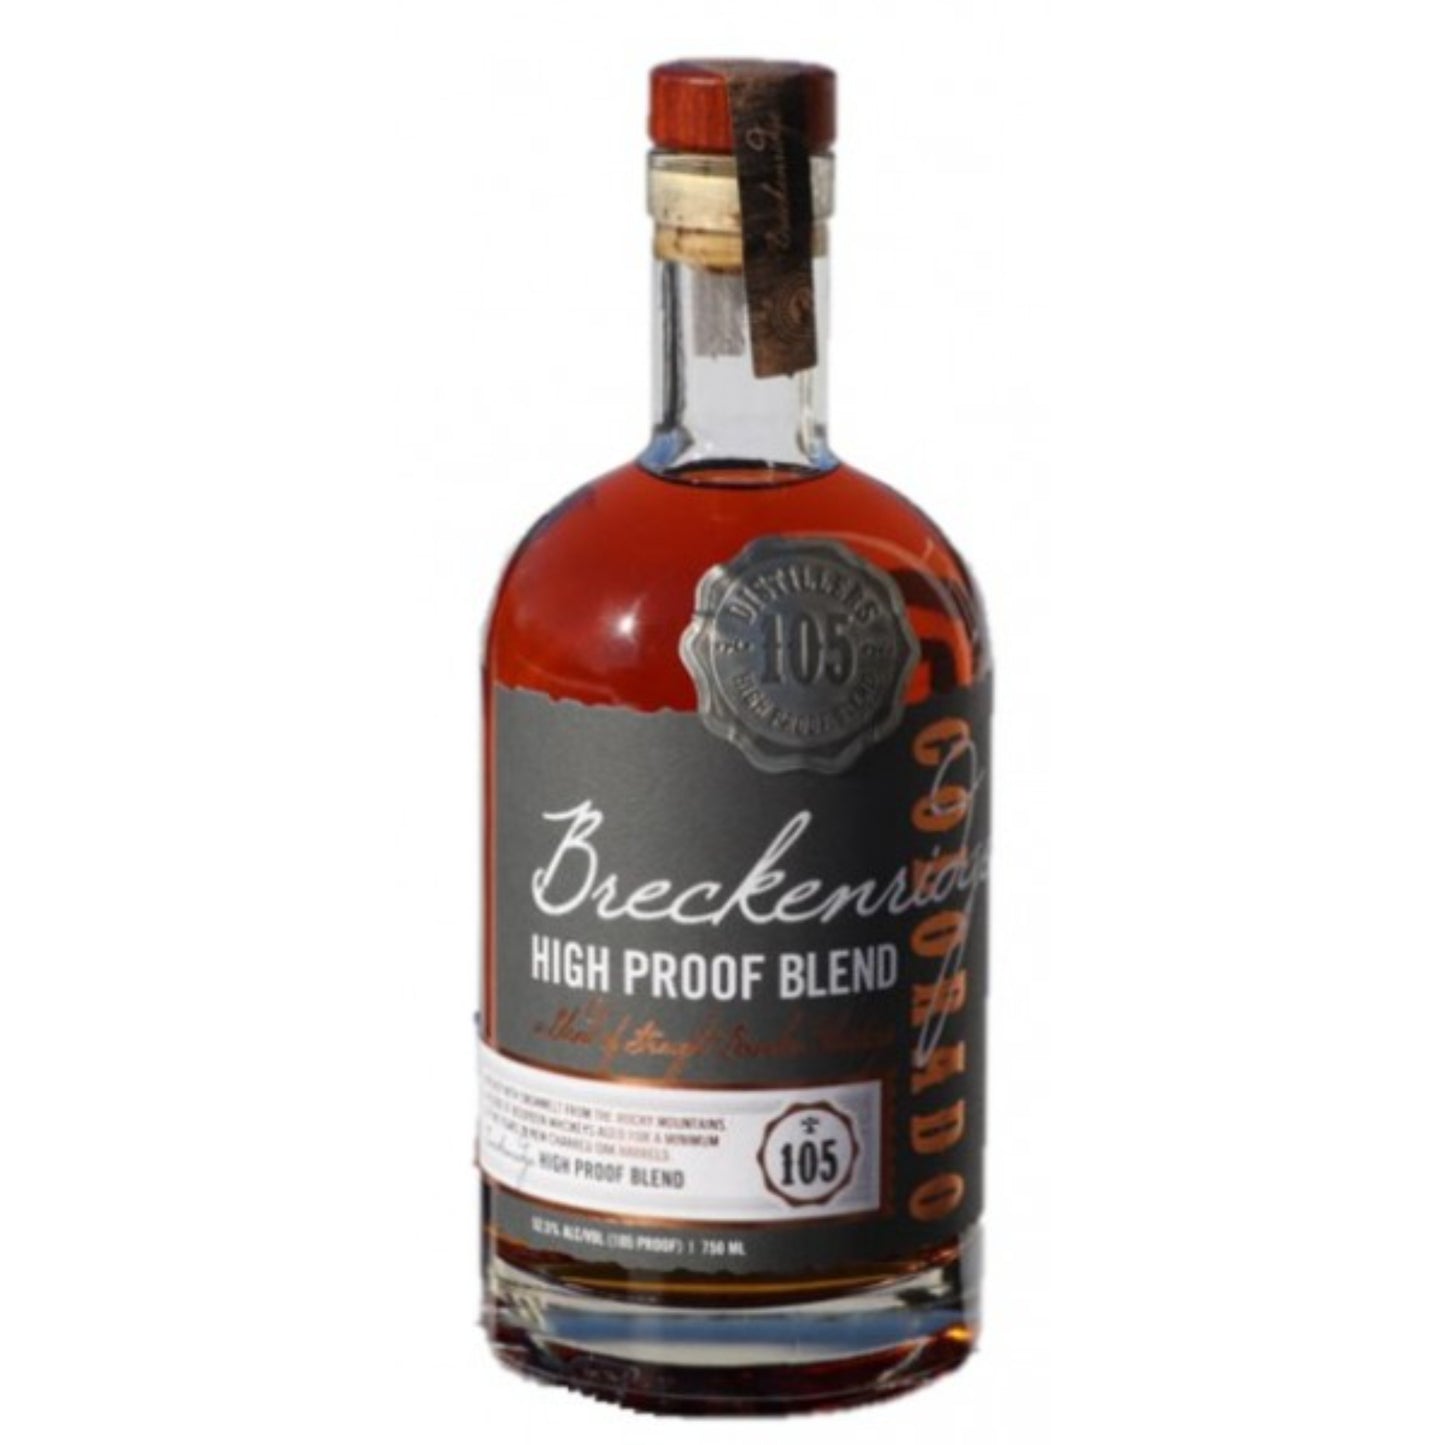 Breckenridge High Proof Blend Bourbon